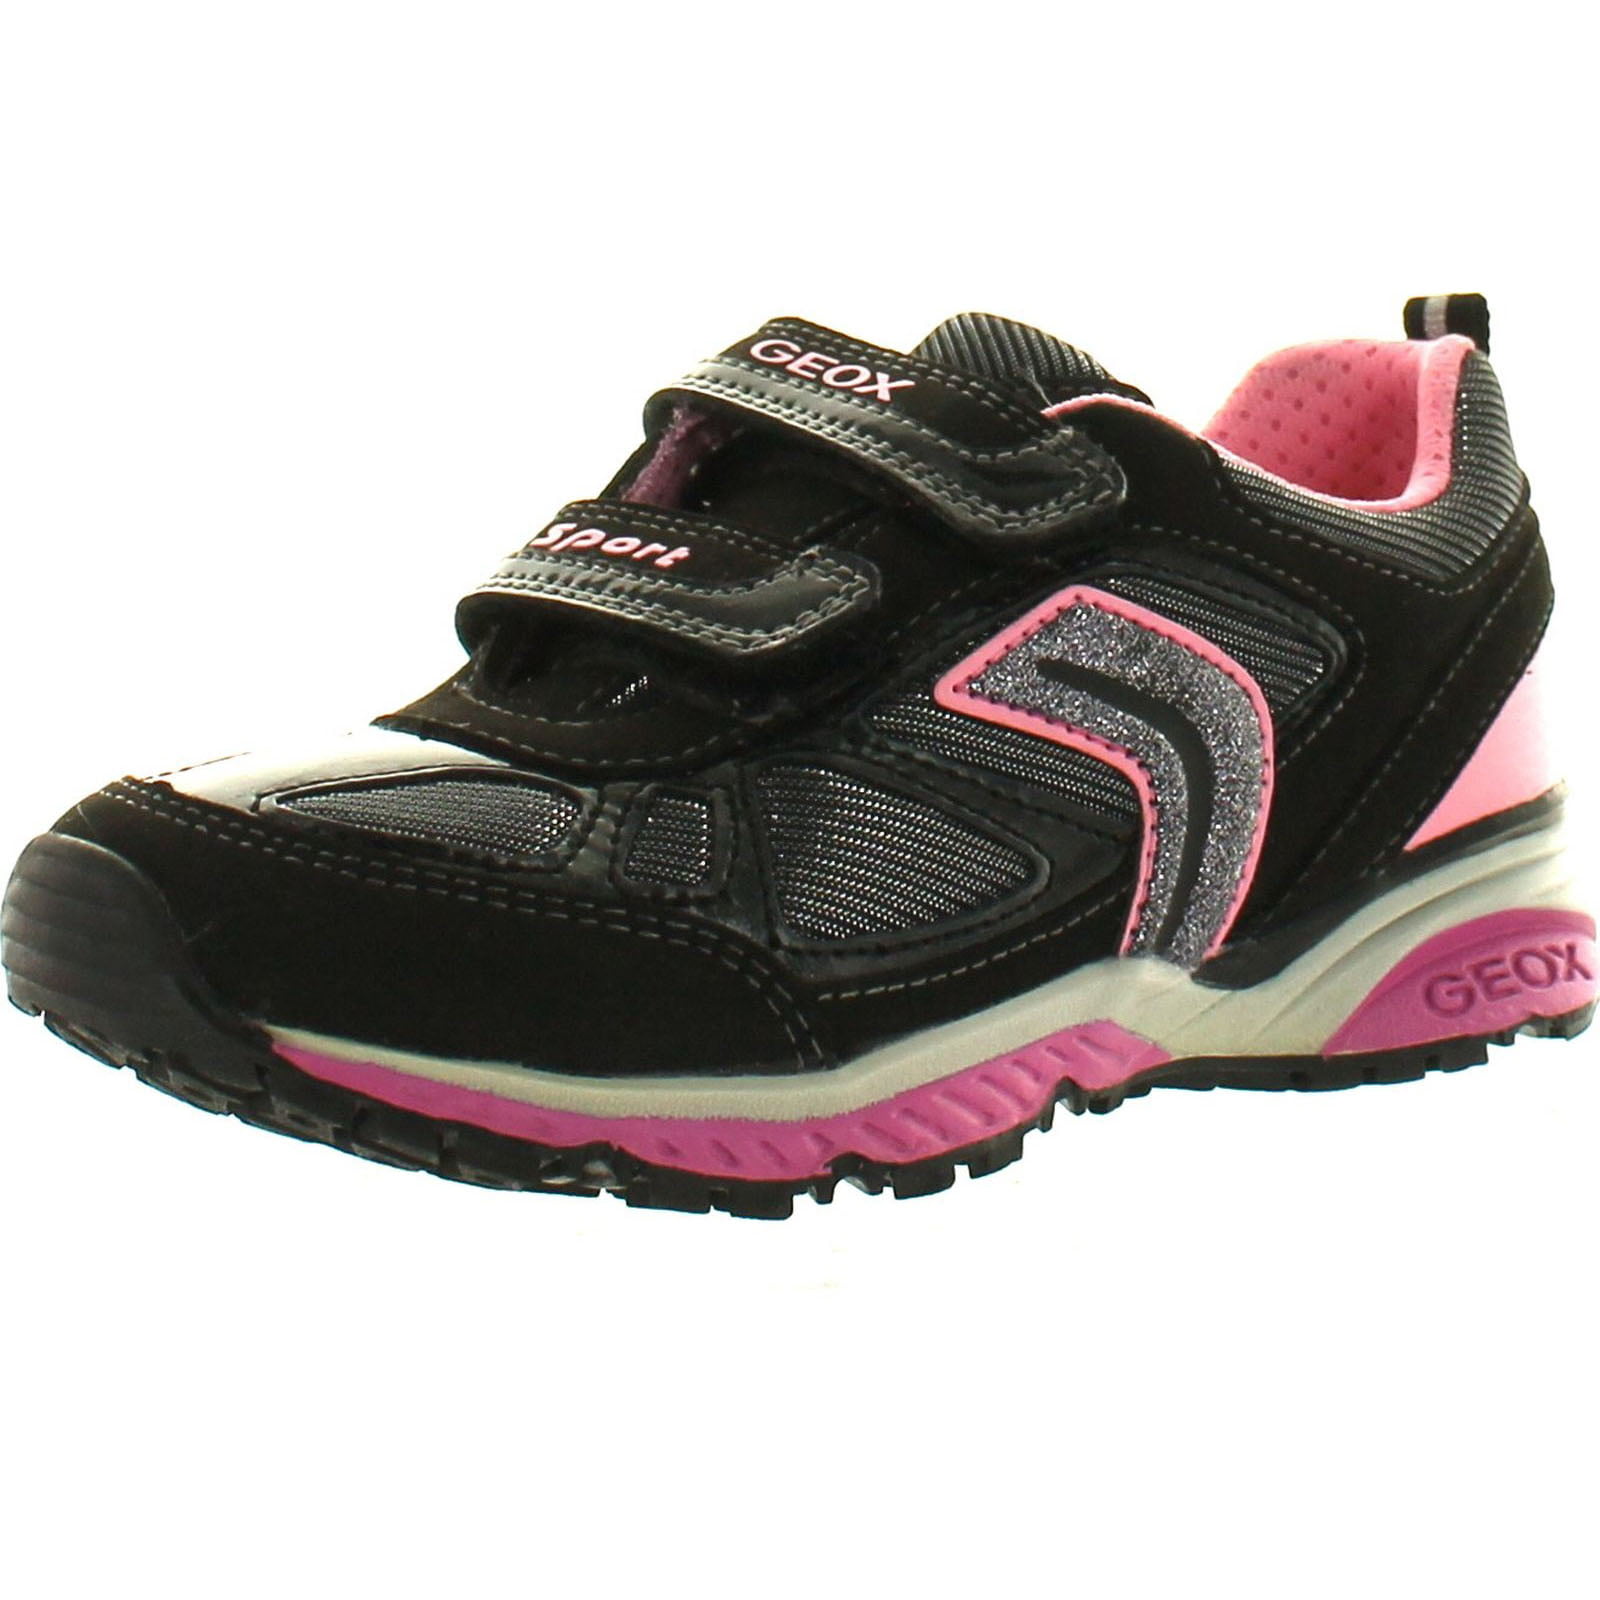 Afspraak Aanzetten Humaan Geox Girls J Bernie Fashion Sneakers, Black/Lt Pink, 39 - Walmart.com